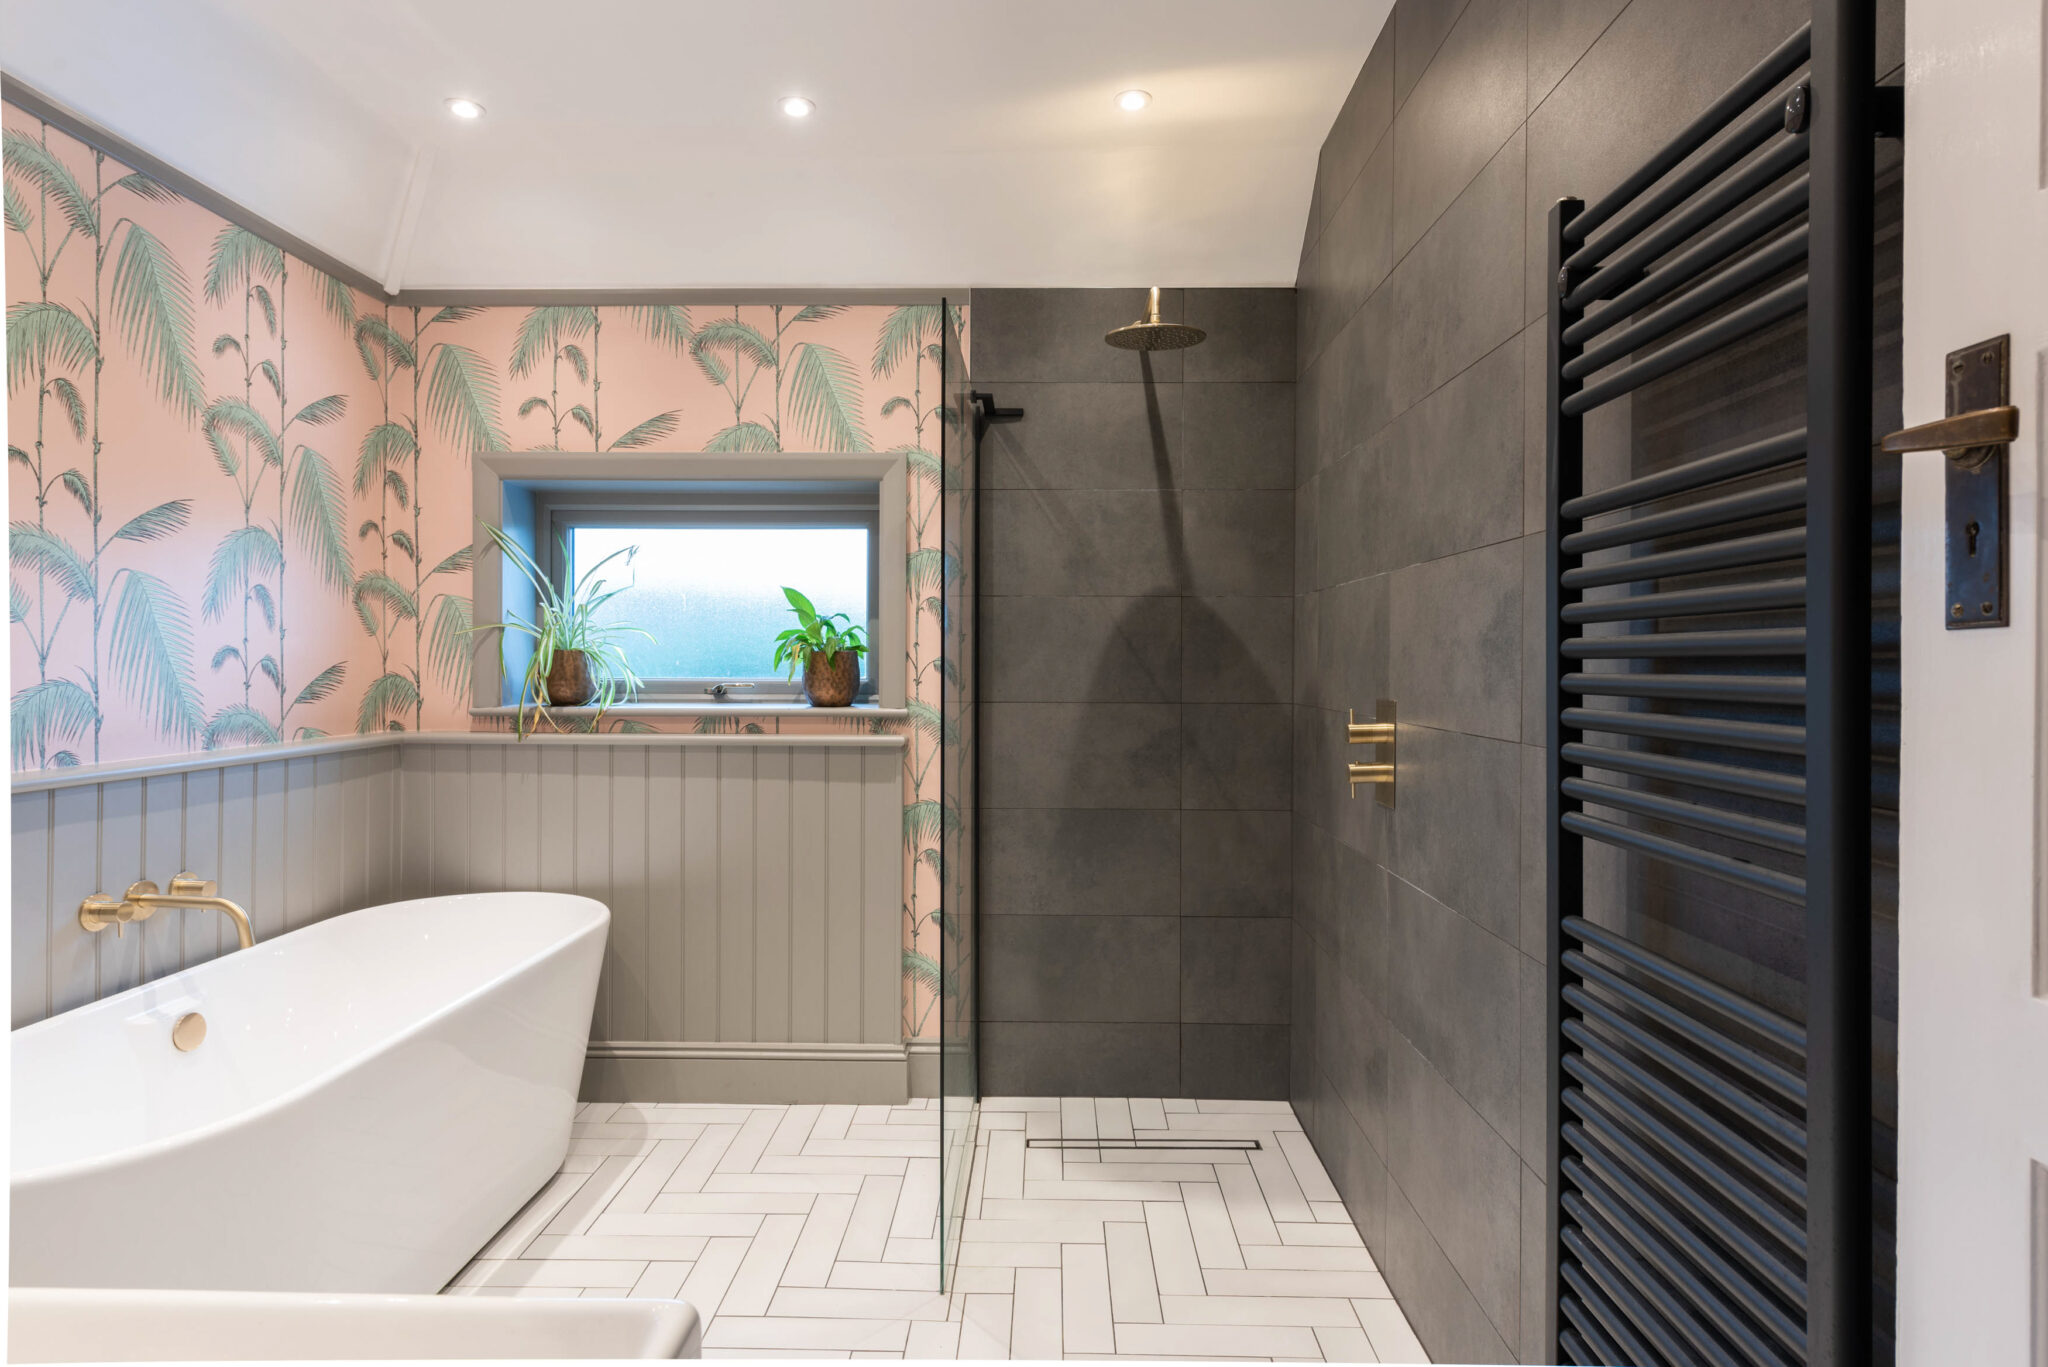 sanitary-ware-ceramics-tiles-interior-design-free-standing-parker-bathroom-brighton-studio-bagno-pr